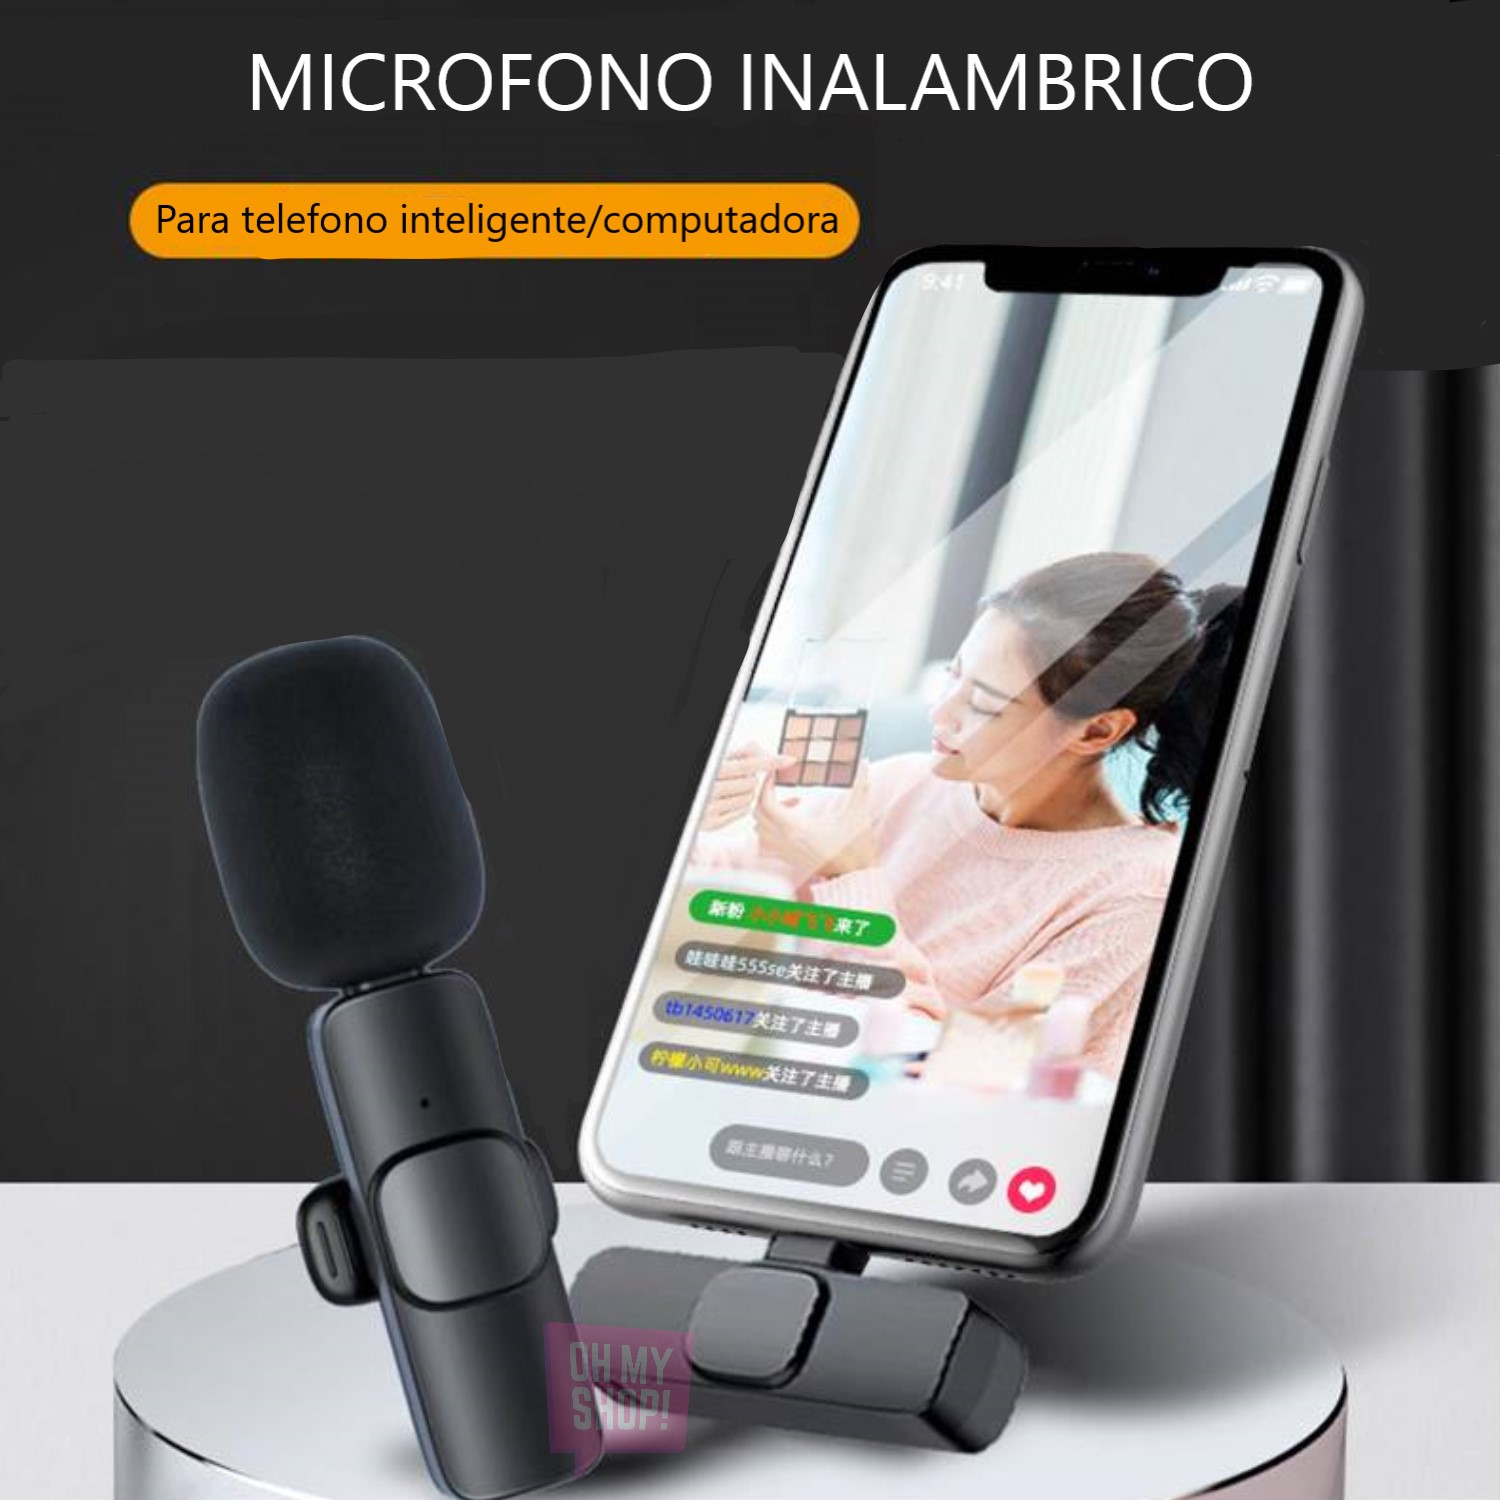 Micrófono Inalámbrico Corbatero Celular Android Usb C